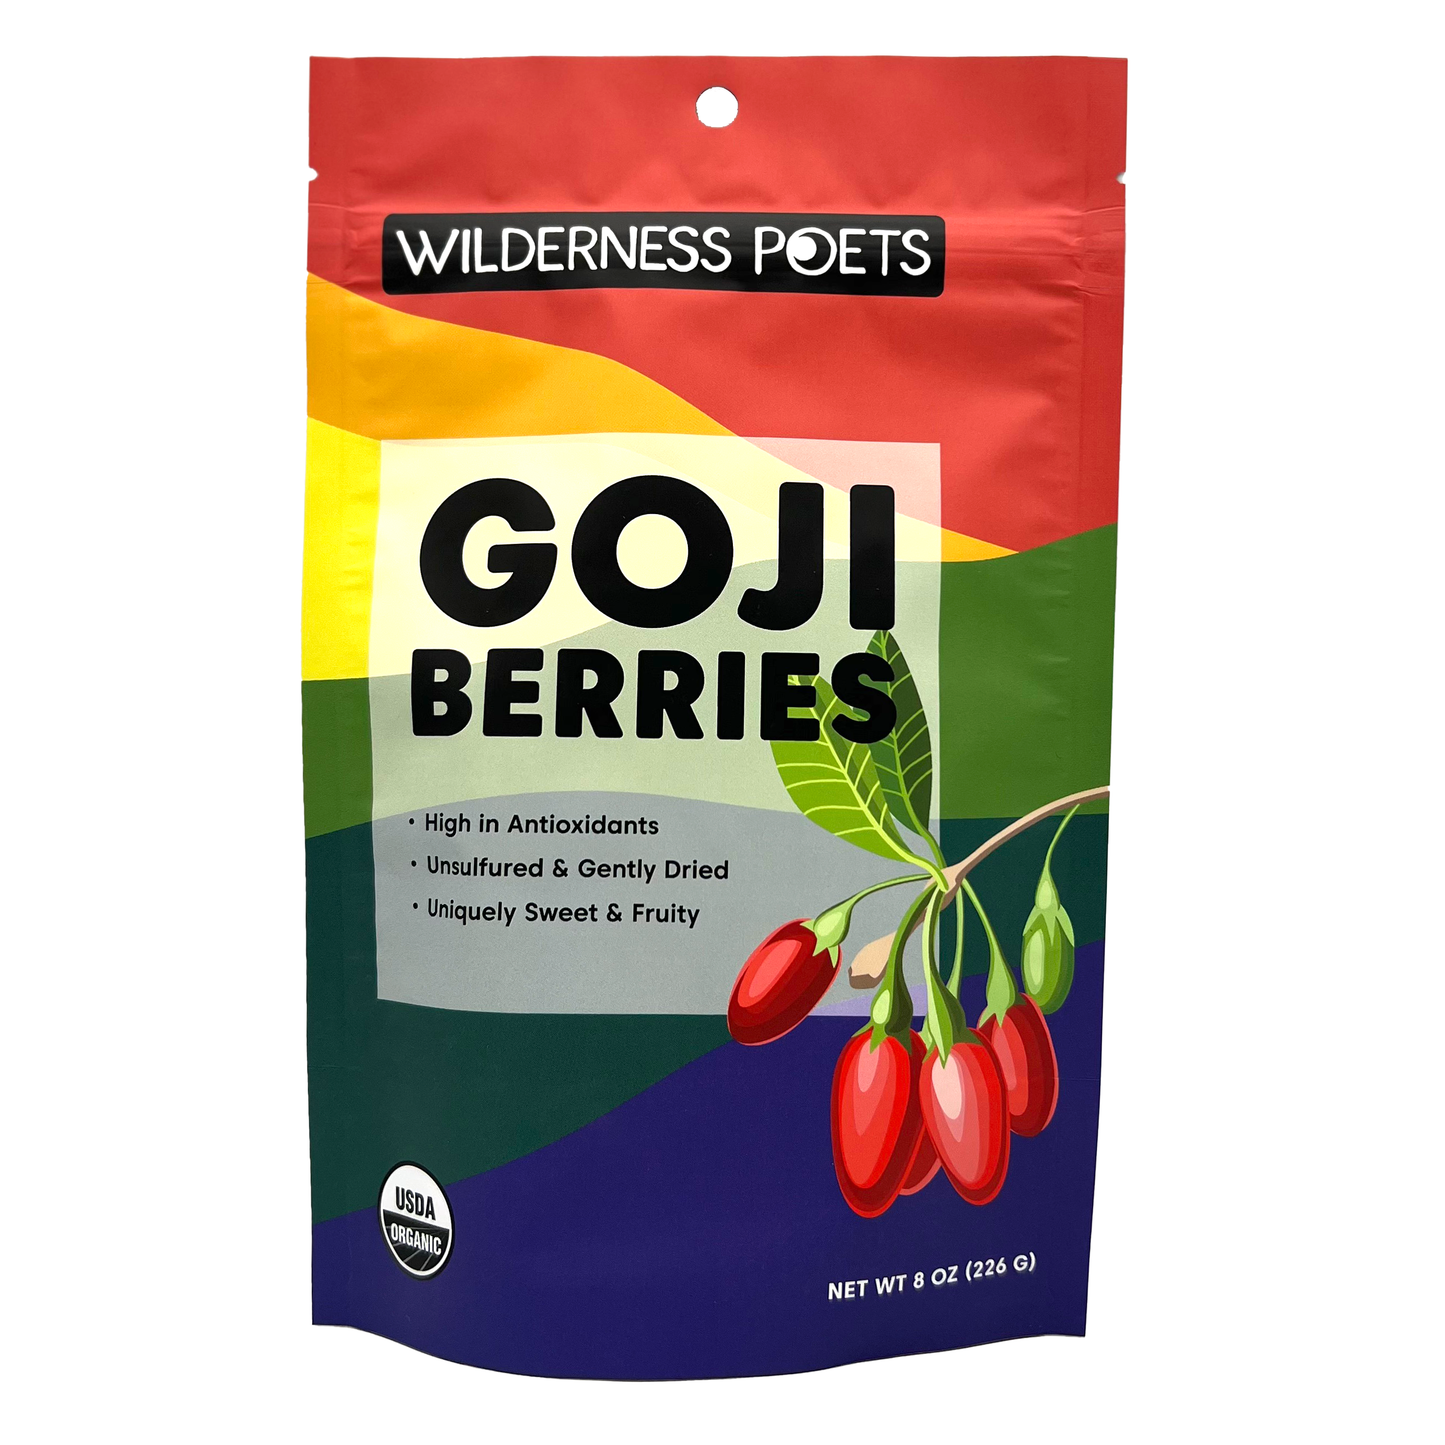 Goji Berries - Dried, Organic